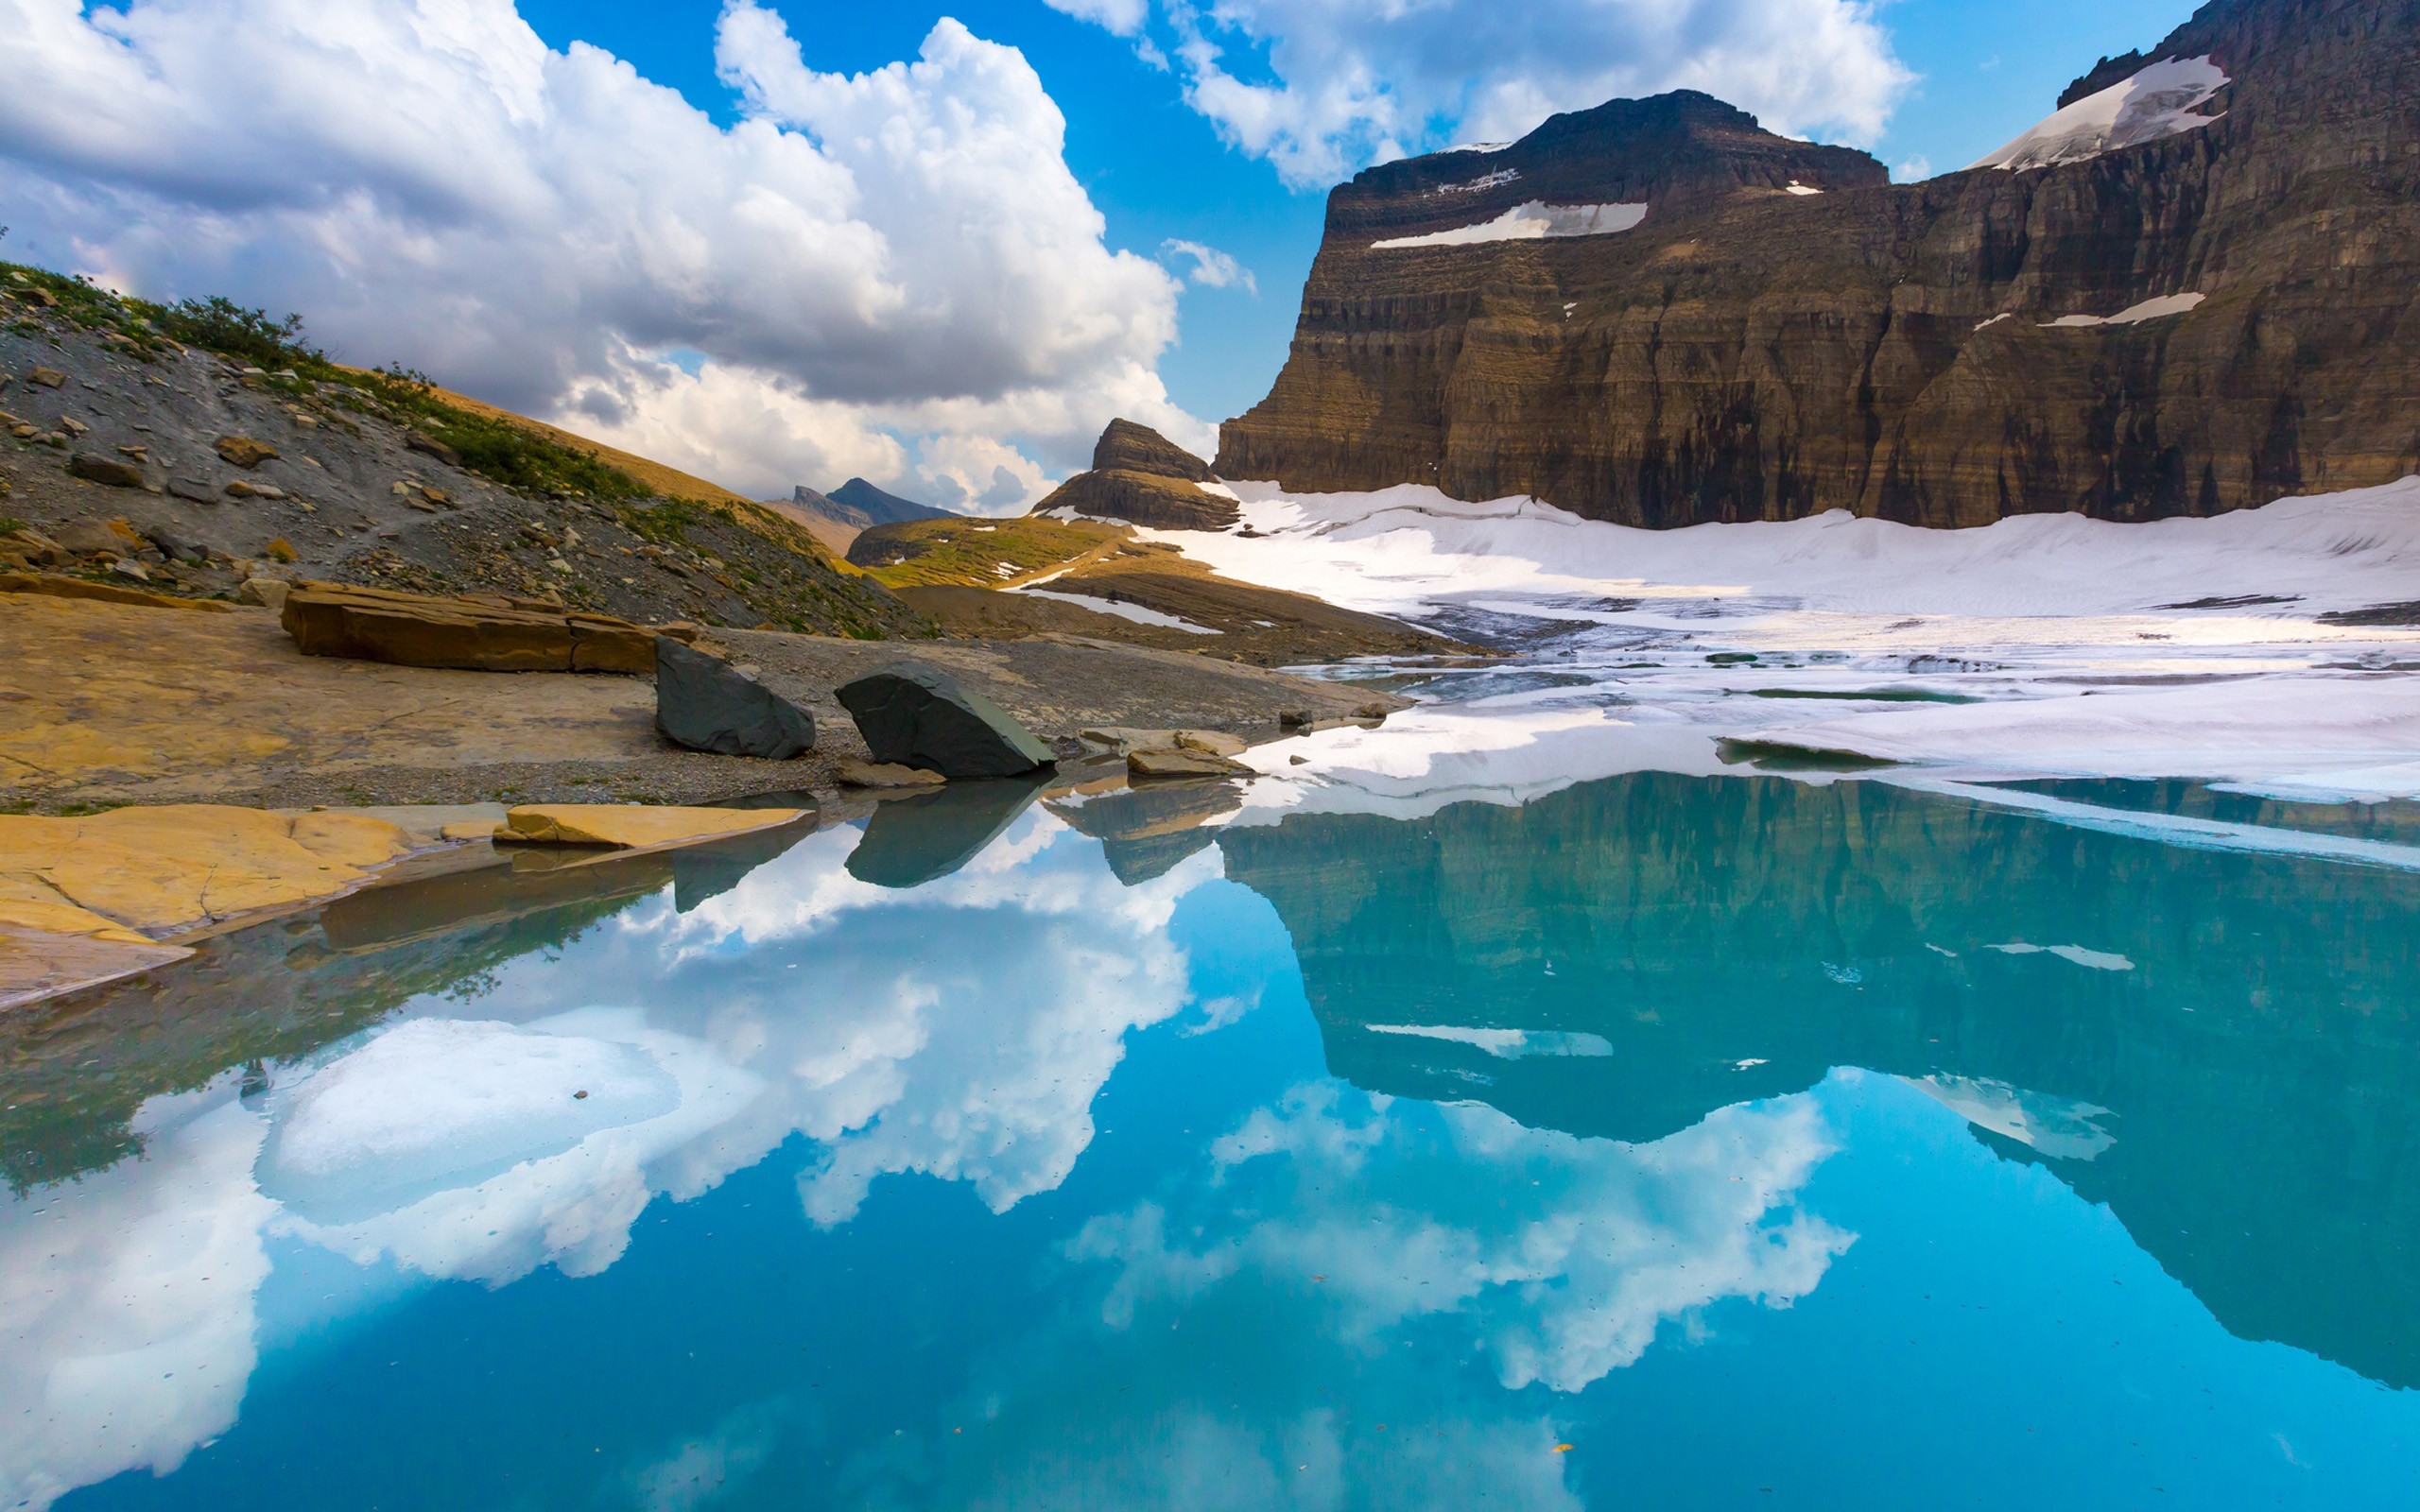 General 2560x1600 Glacial Lake nature mountains reflection water landscape rocks